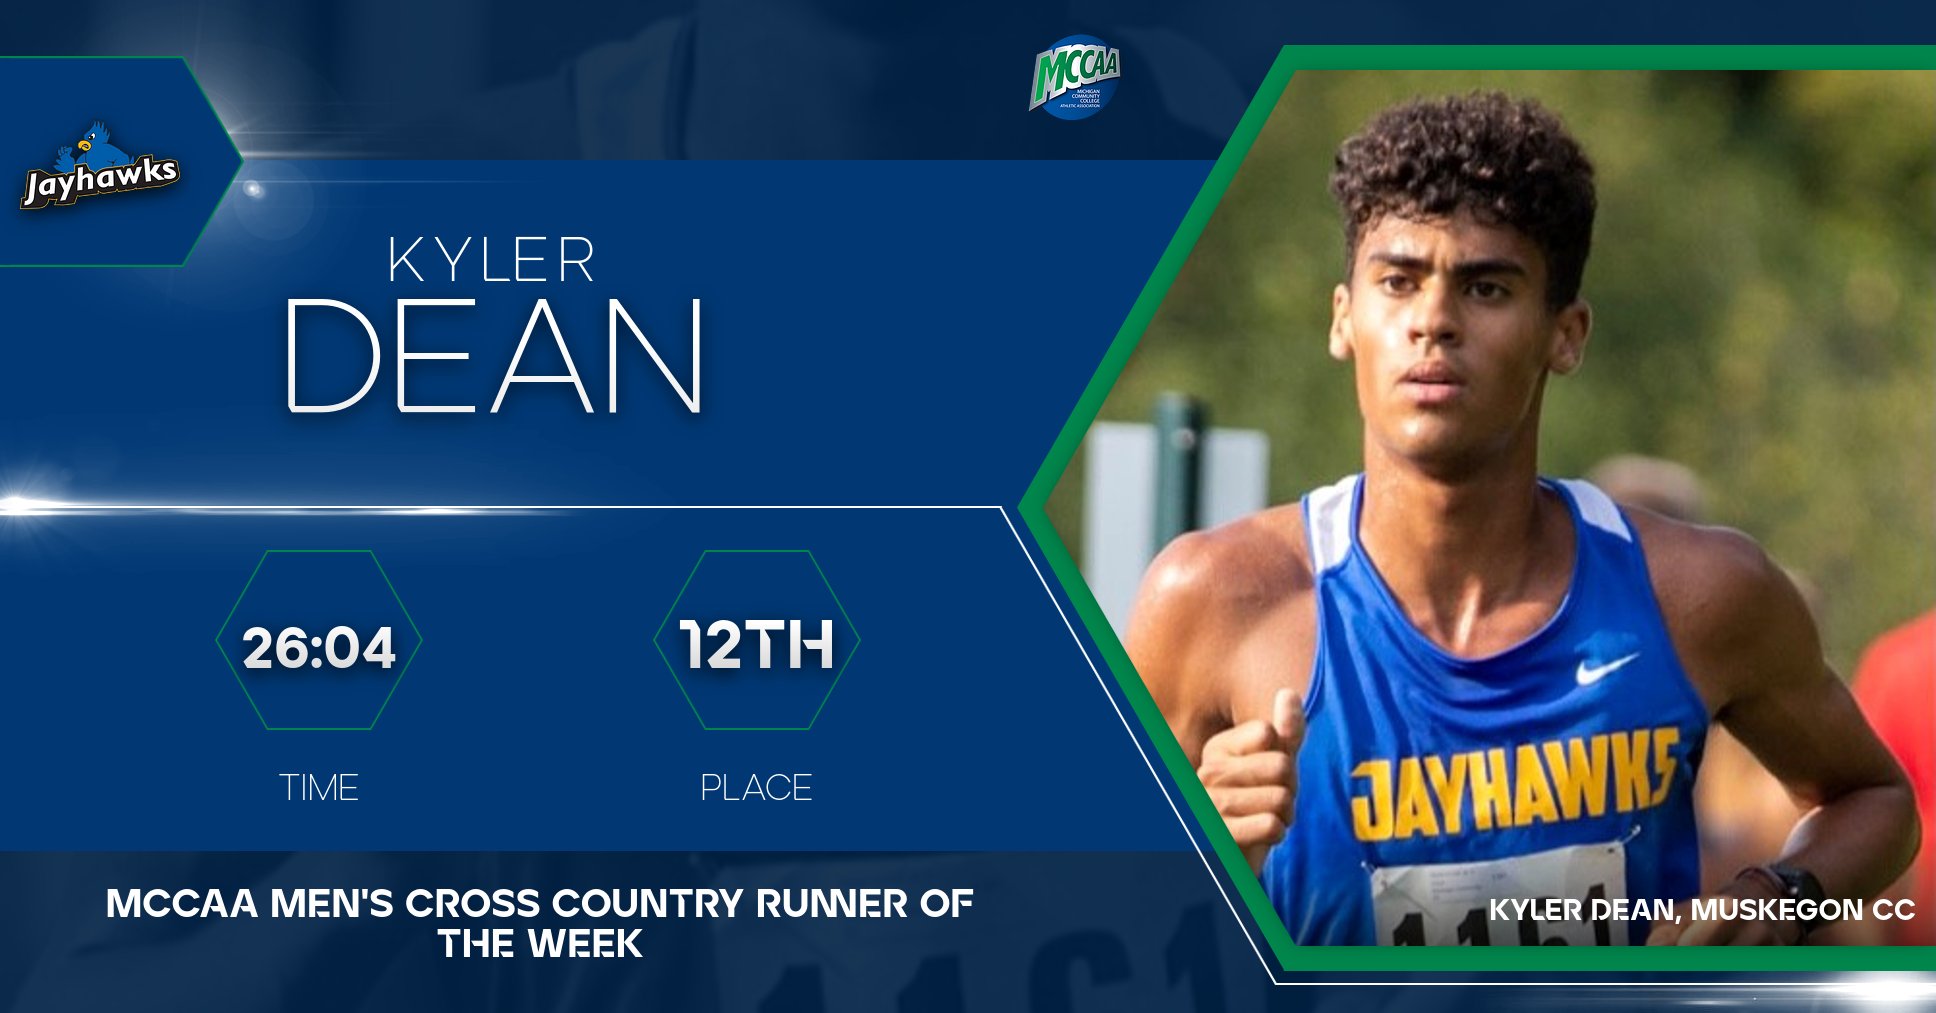 Kyler Dean, MCCAA Men's Cross Country Runner of the Week. Muskegon CC